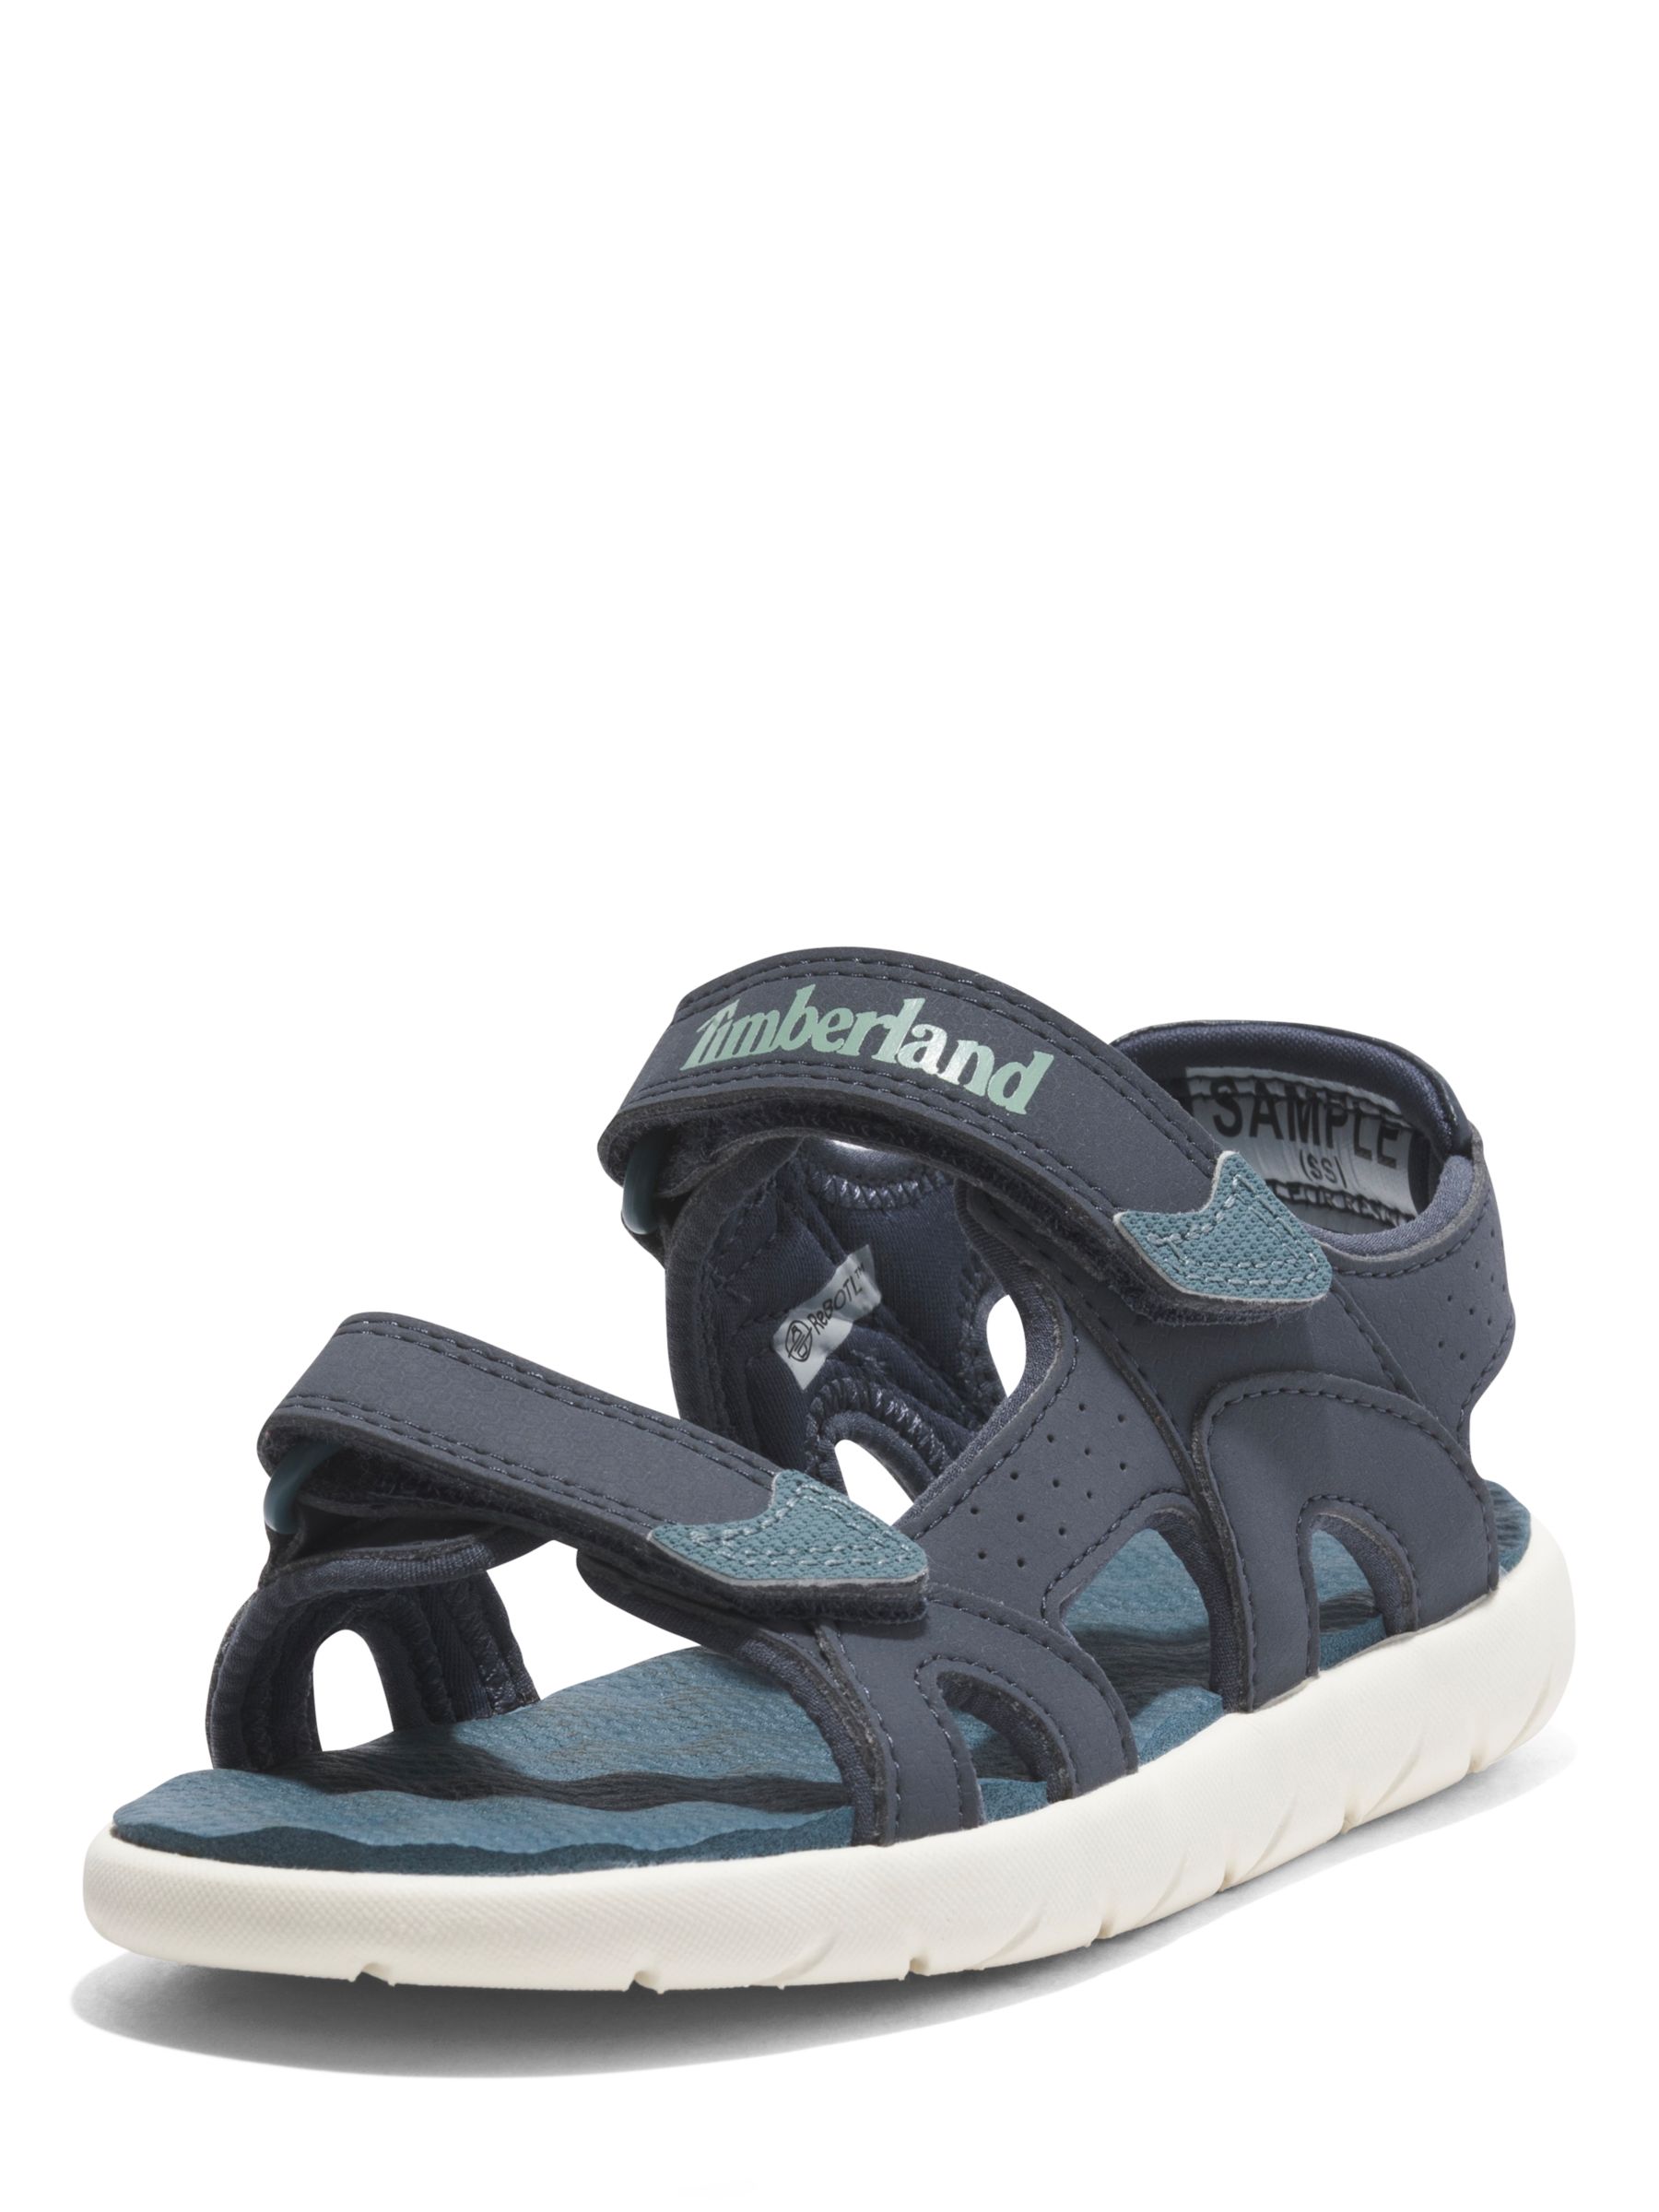 Buy Timberland Kids' Perkins Row Sandals Online at johnlewis.com